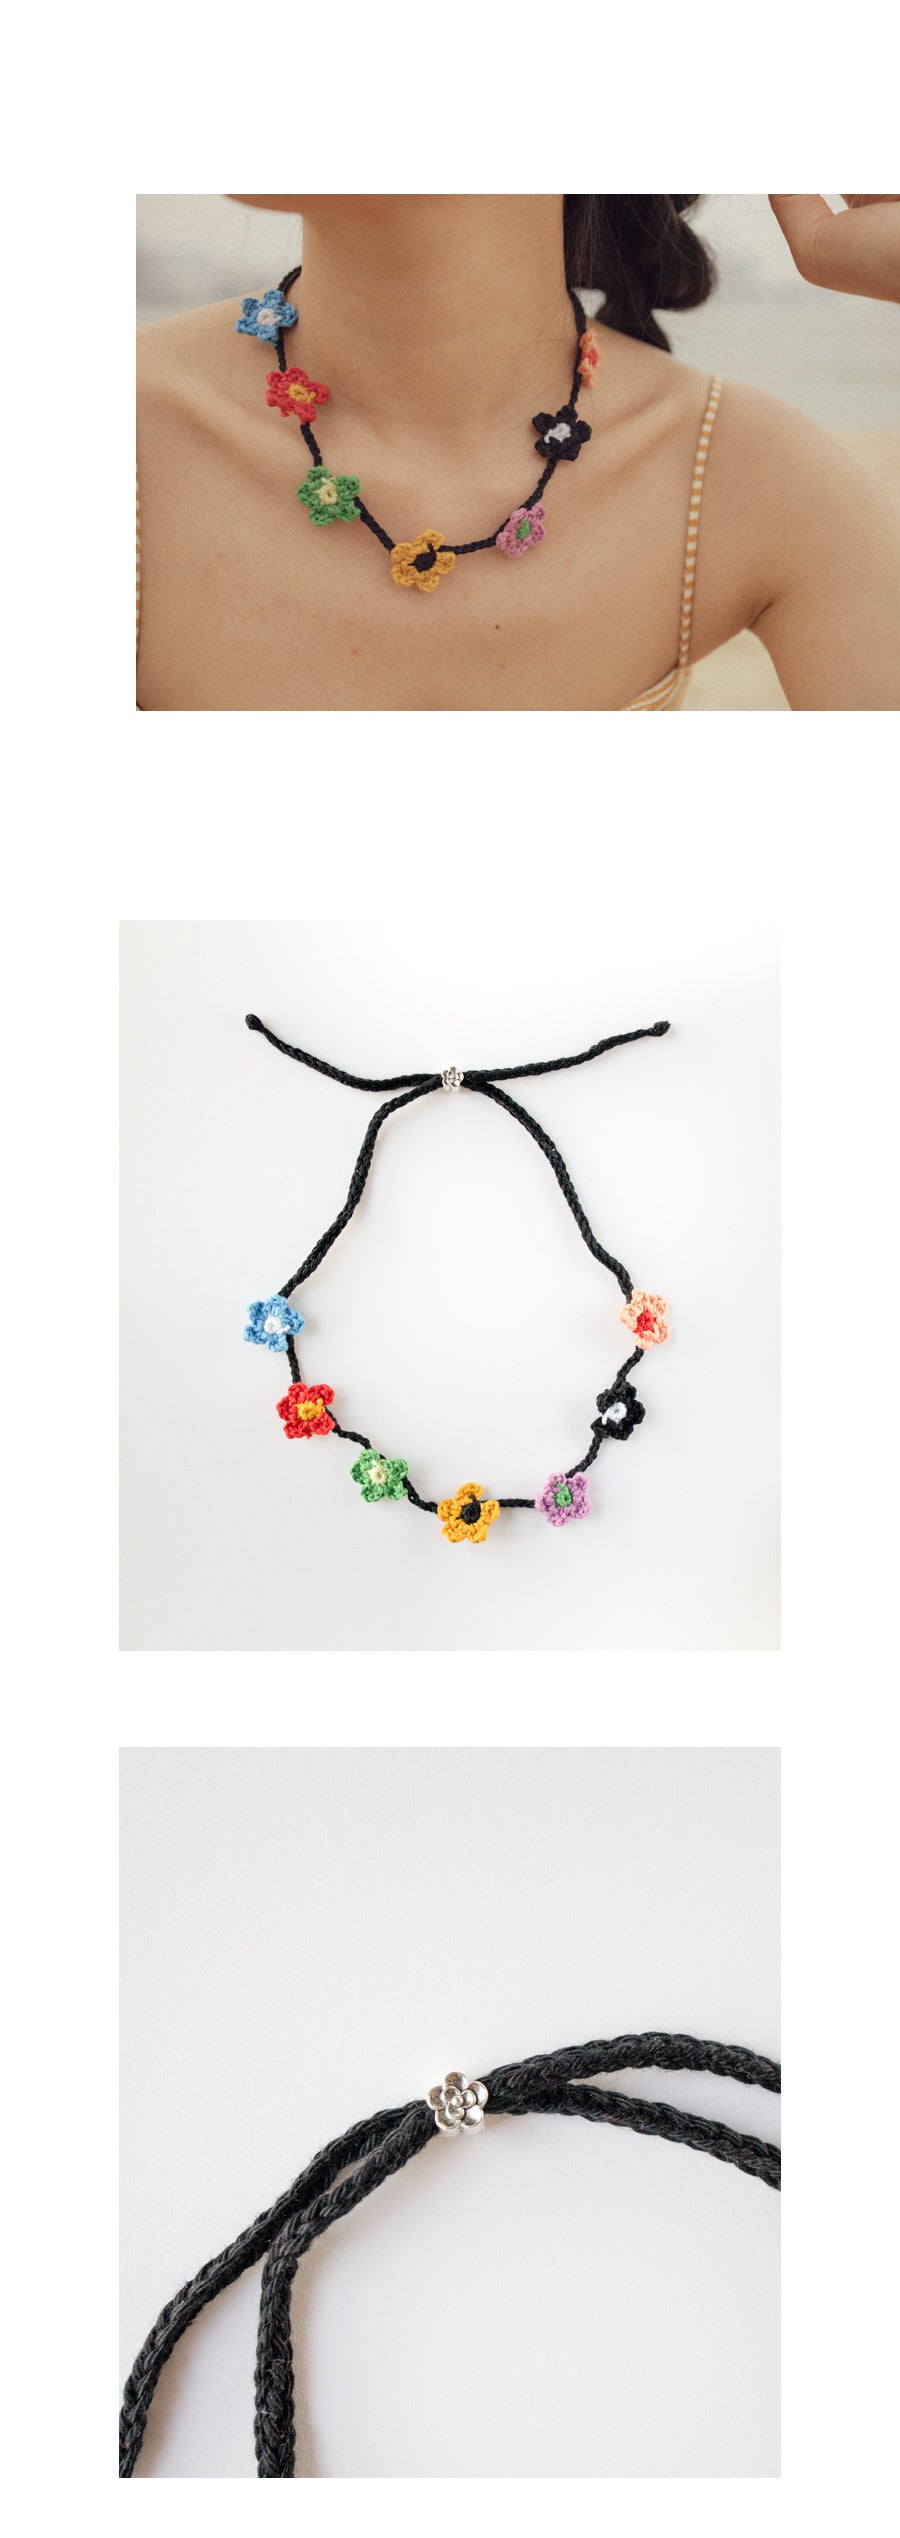 Color flower knit necklace